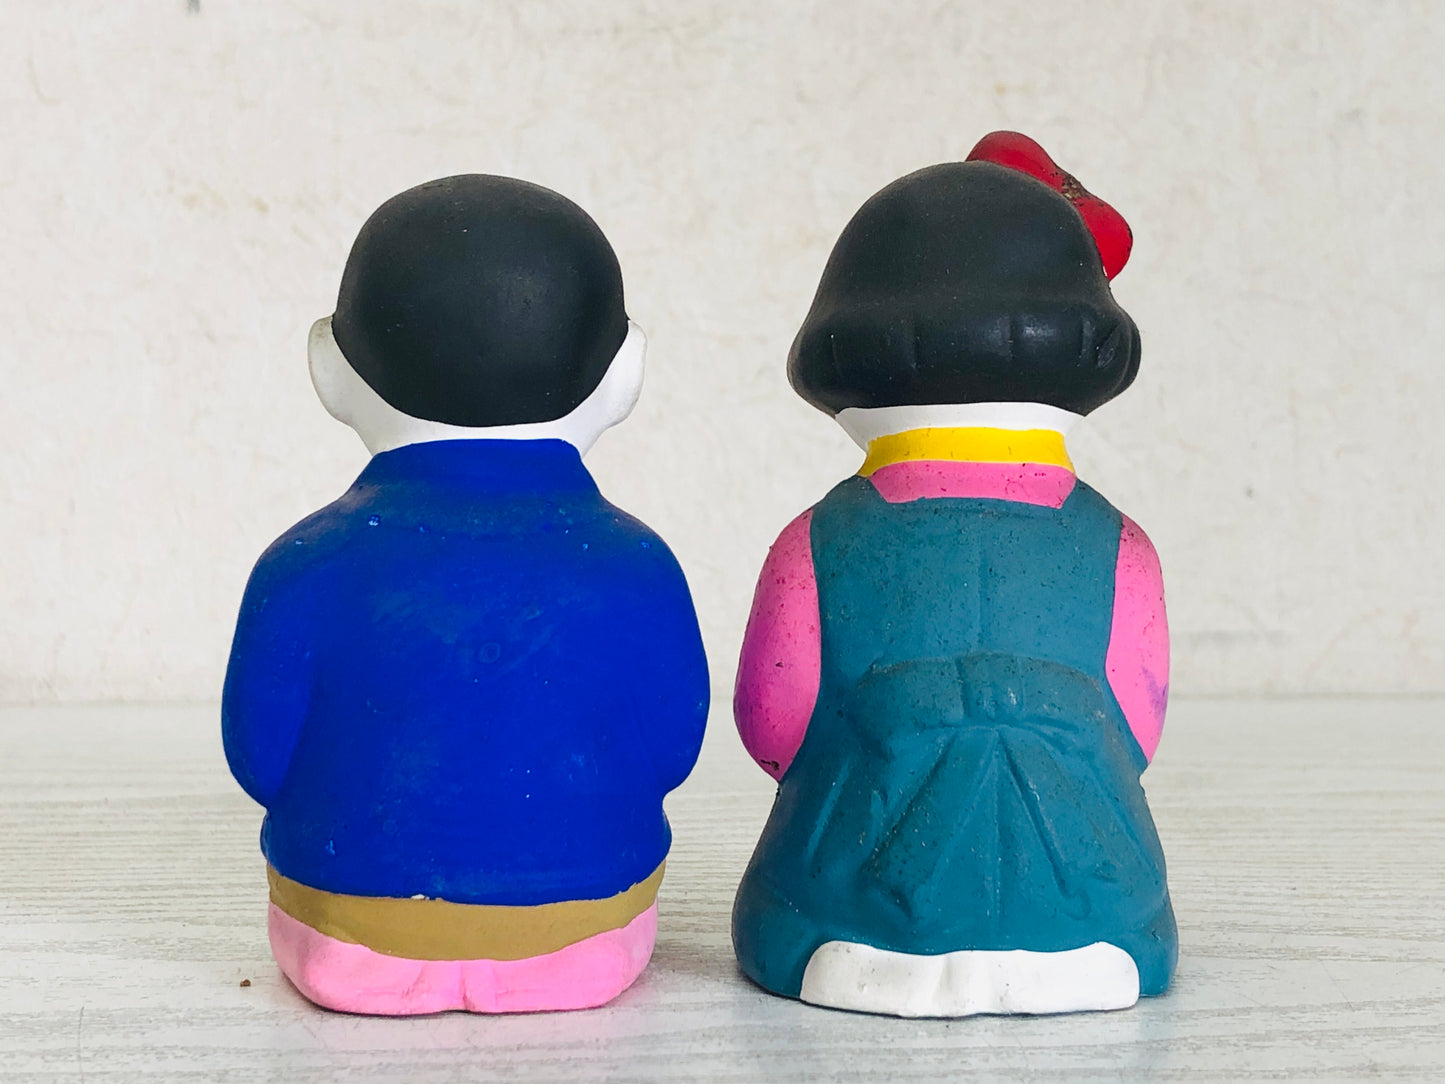 Y3580 NINGYO Clay Doll male female pair praying Japanese vintage antique Japan